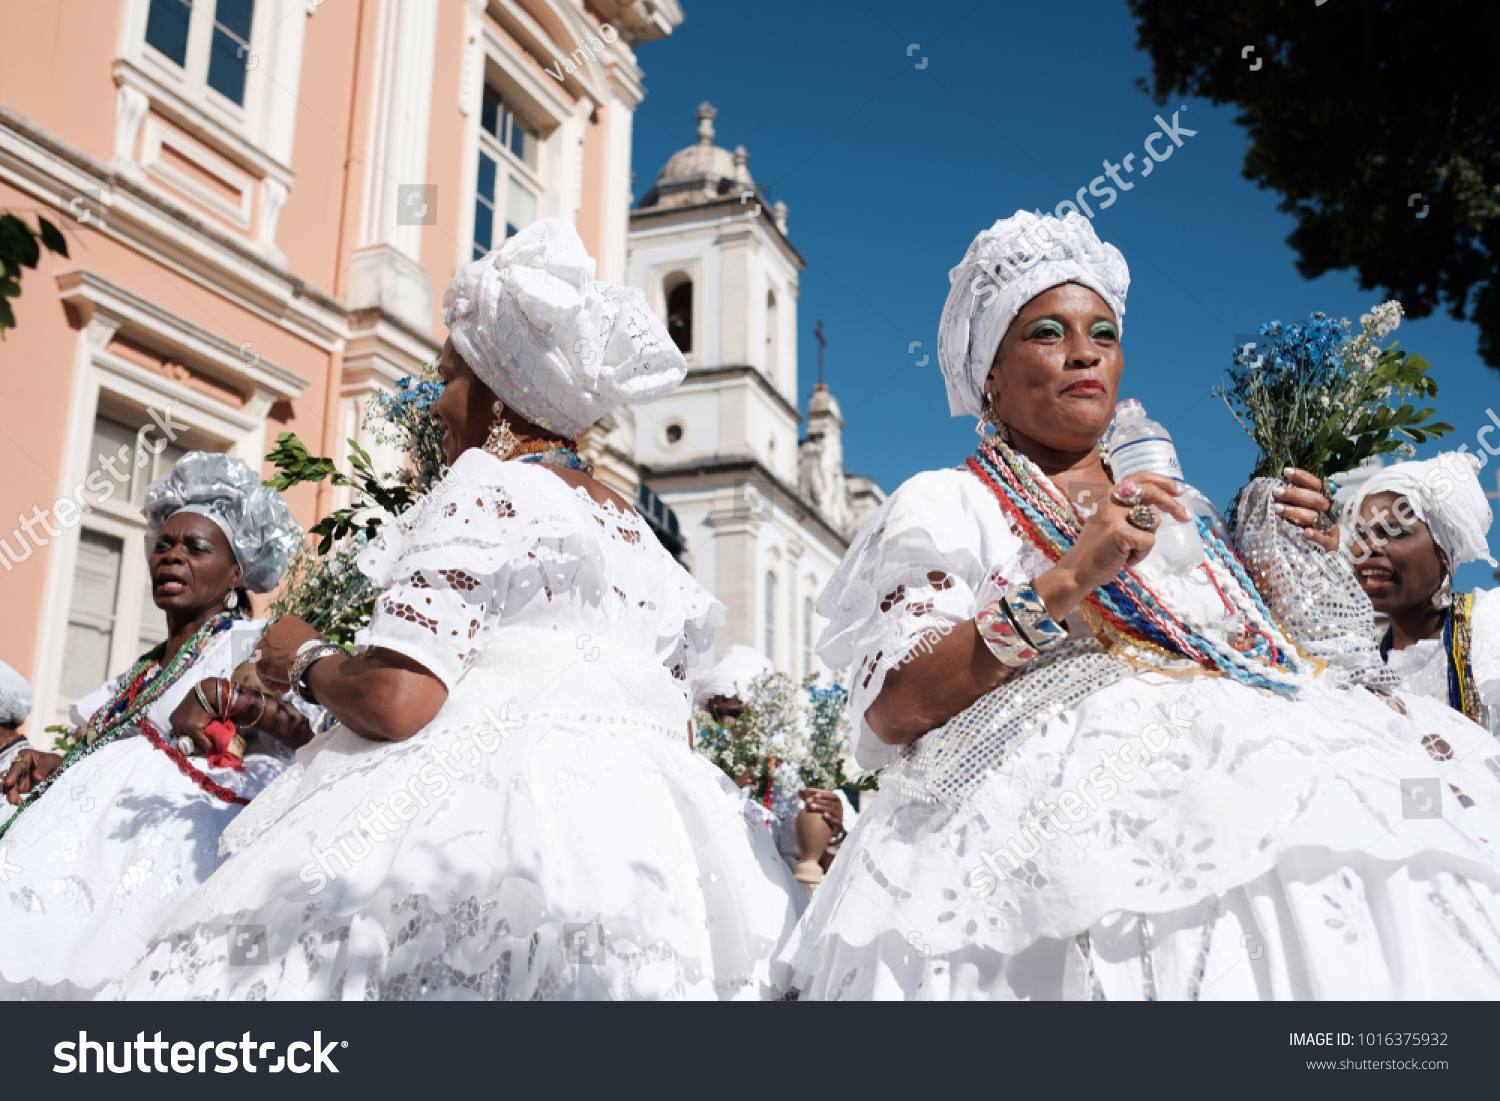 416 Bahiana brazil Images, Stock Photos & Vectors | Shutterstock